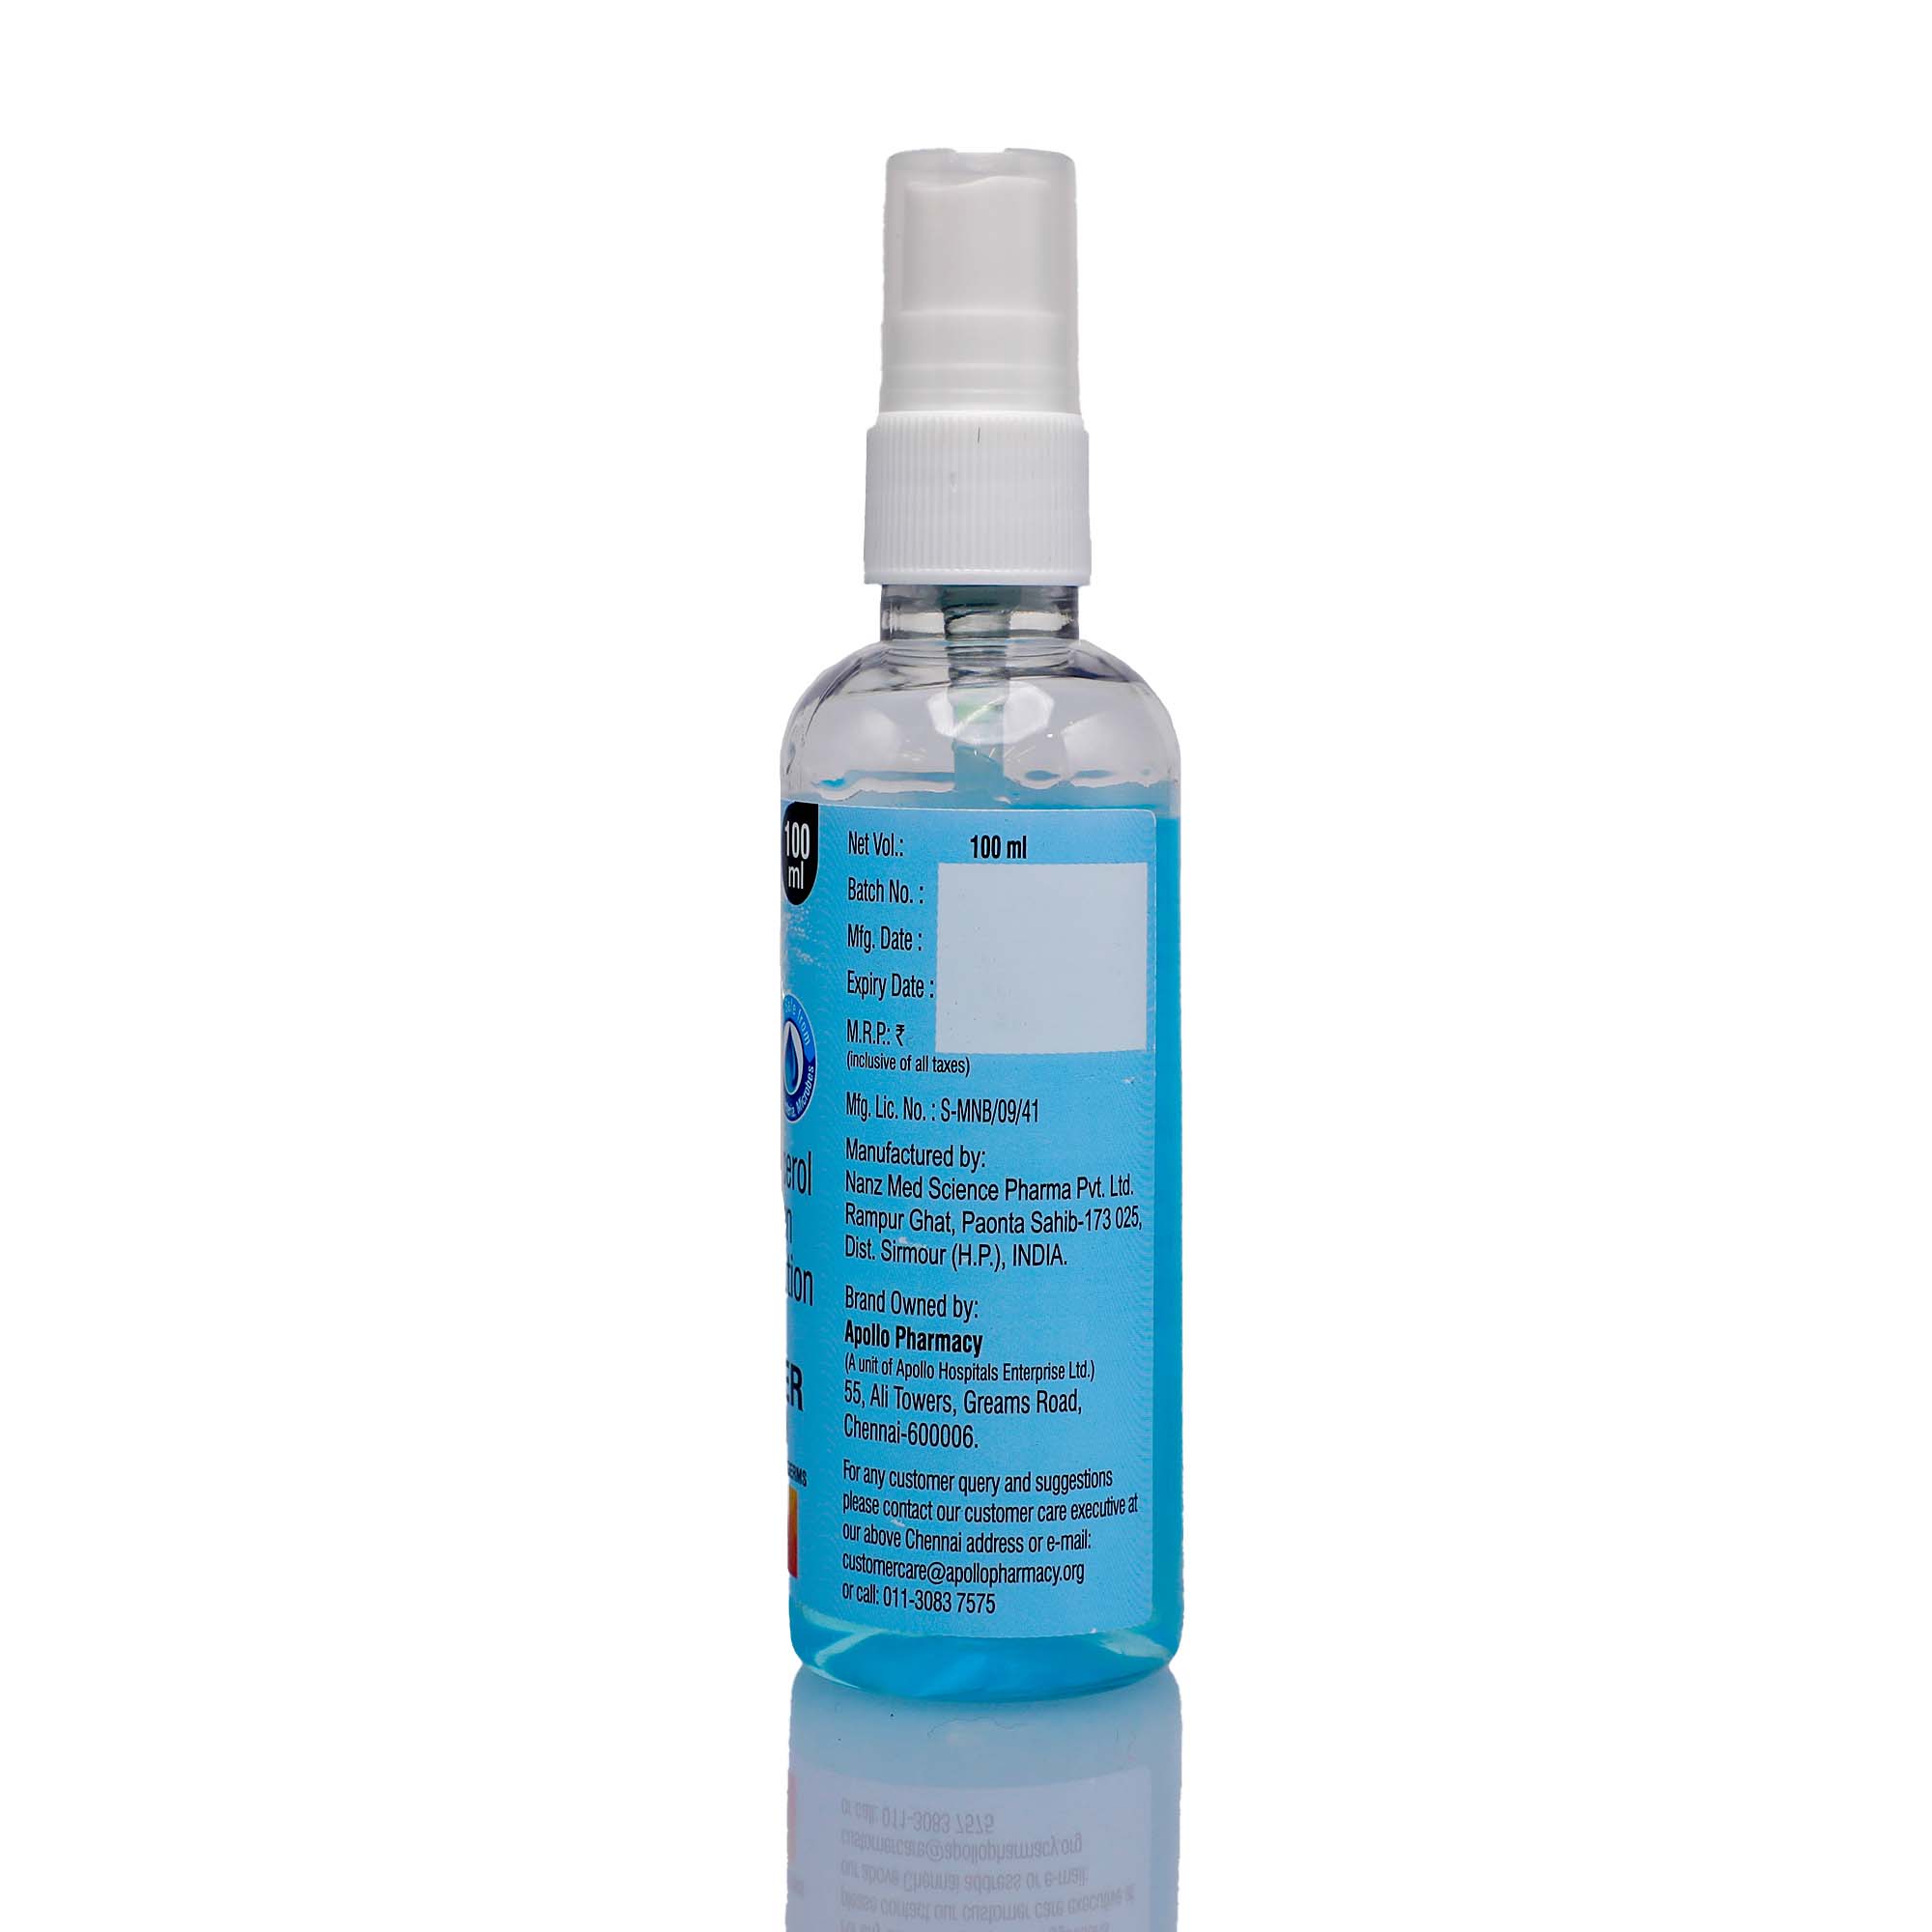 Apollo Life Hand Sanitizer Liquid Spray, 100 ml, Pack of 1 